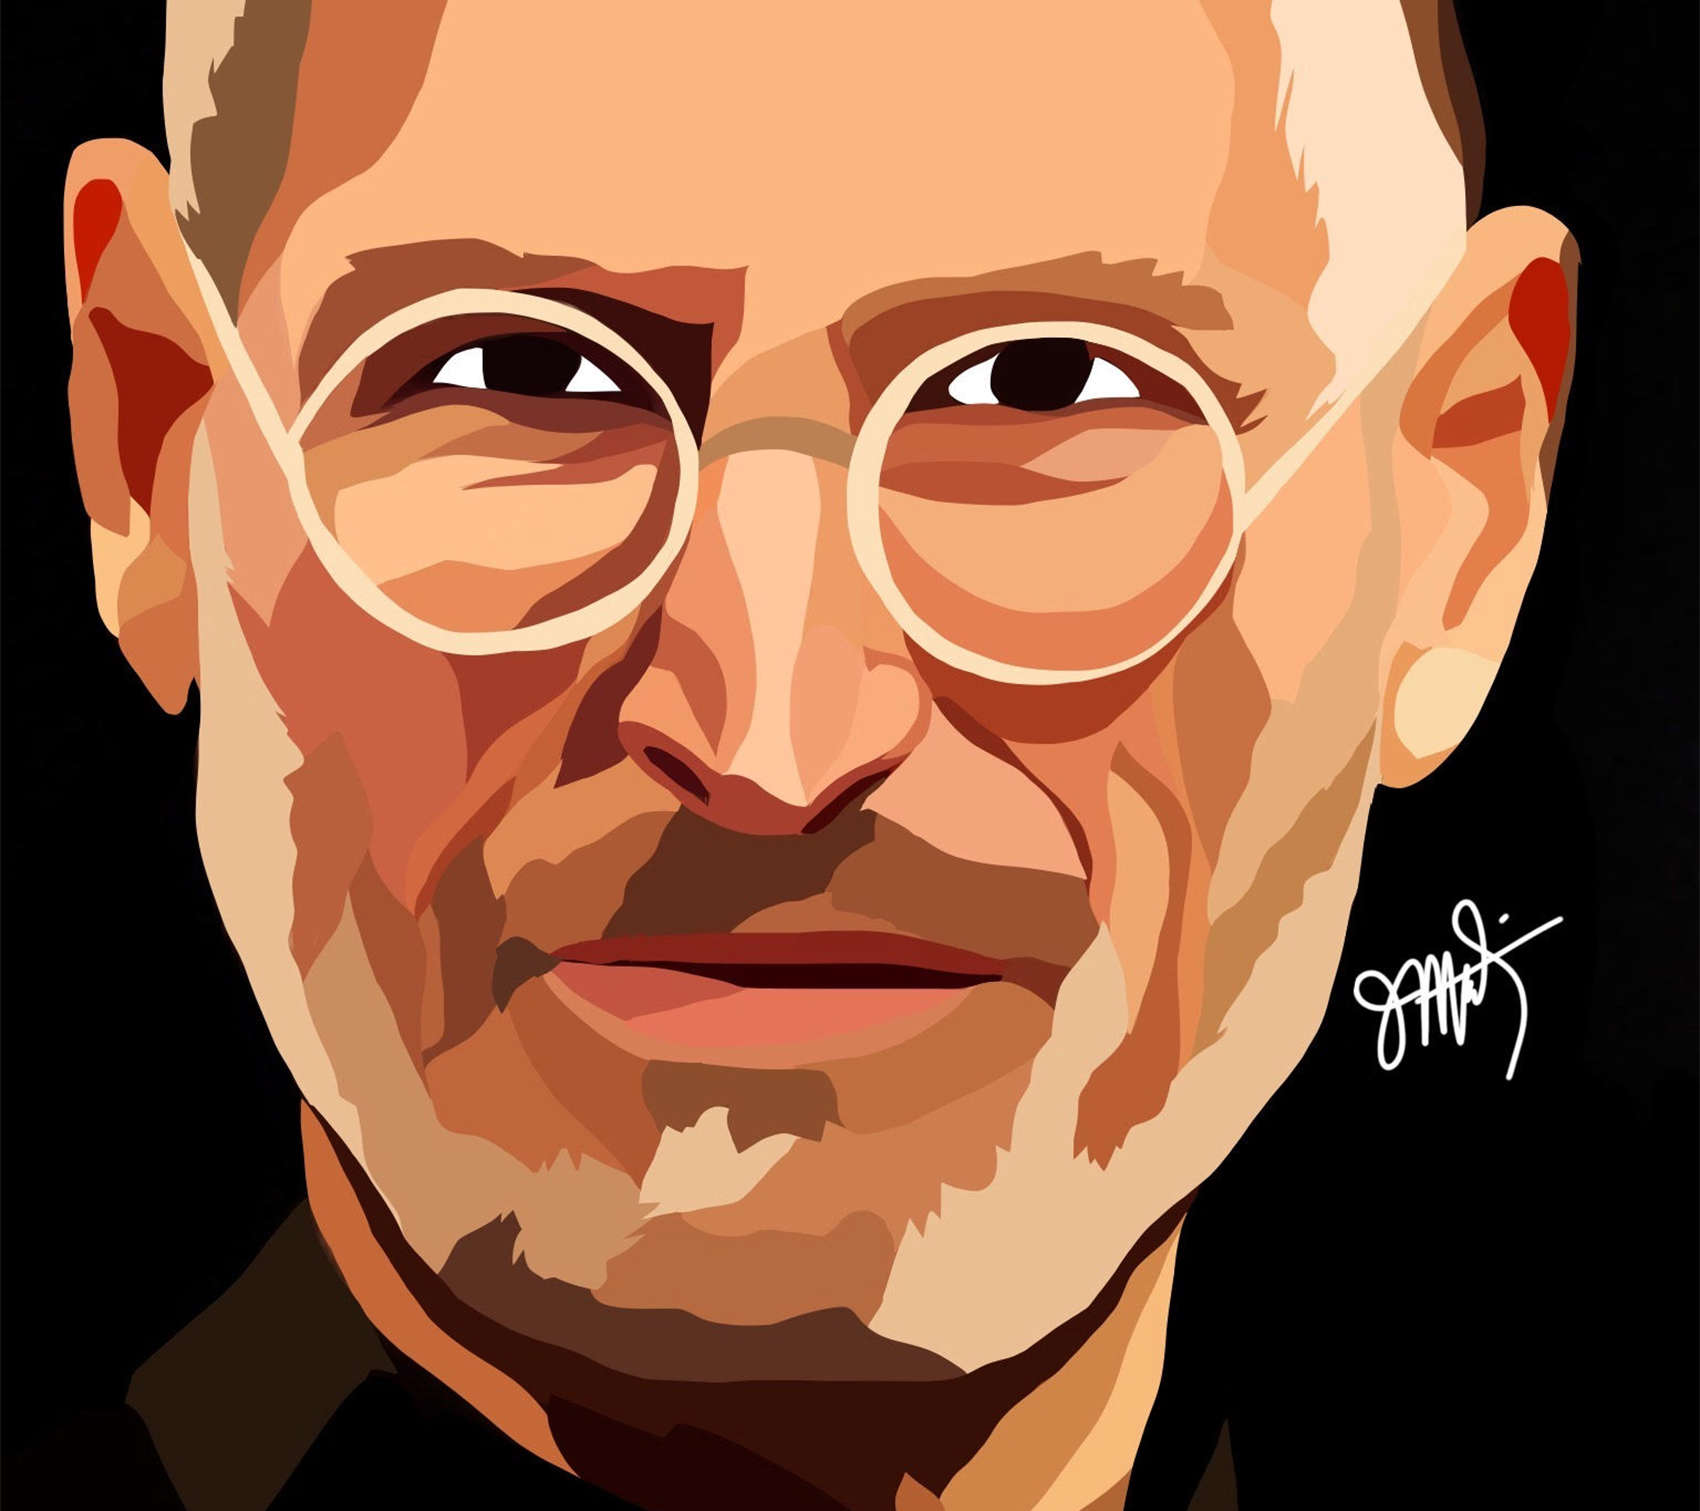 Steve Jobs, creator of the iPad and created on the iPad.